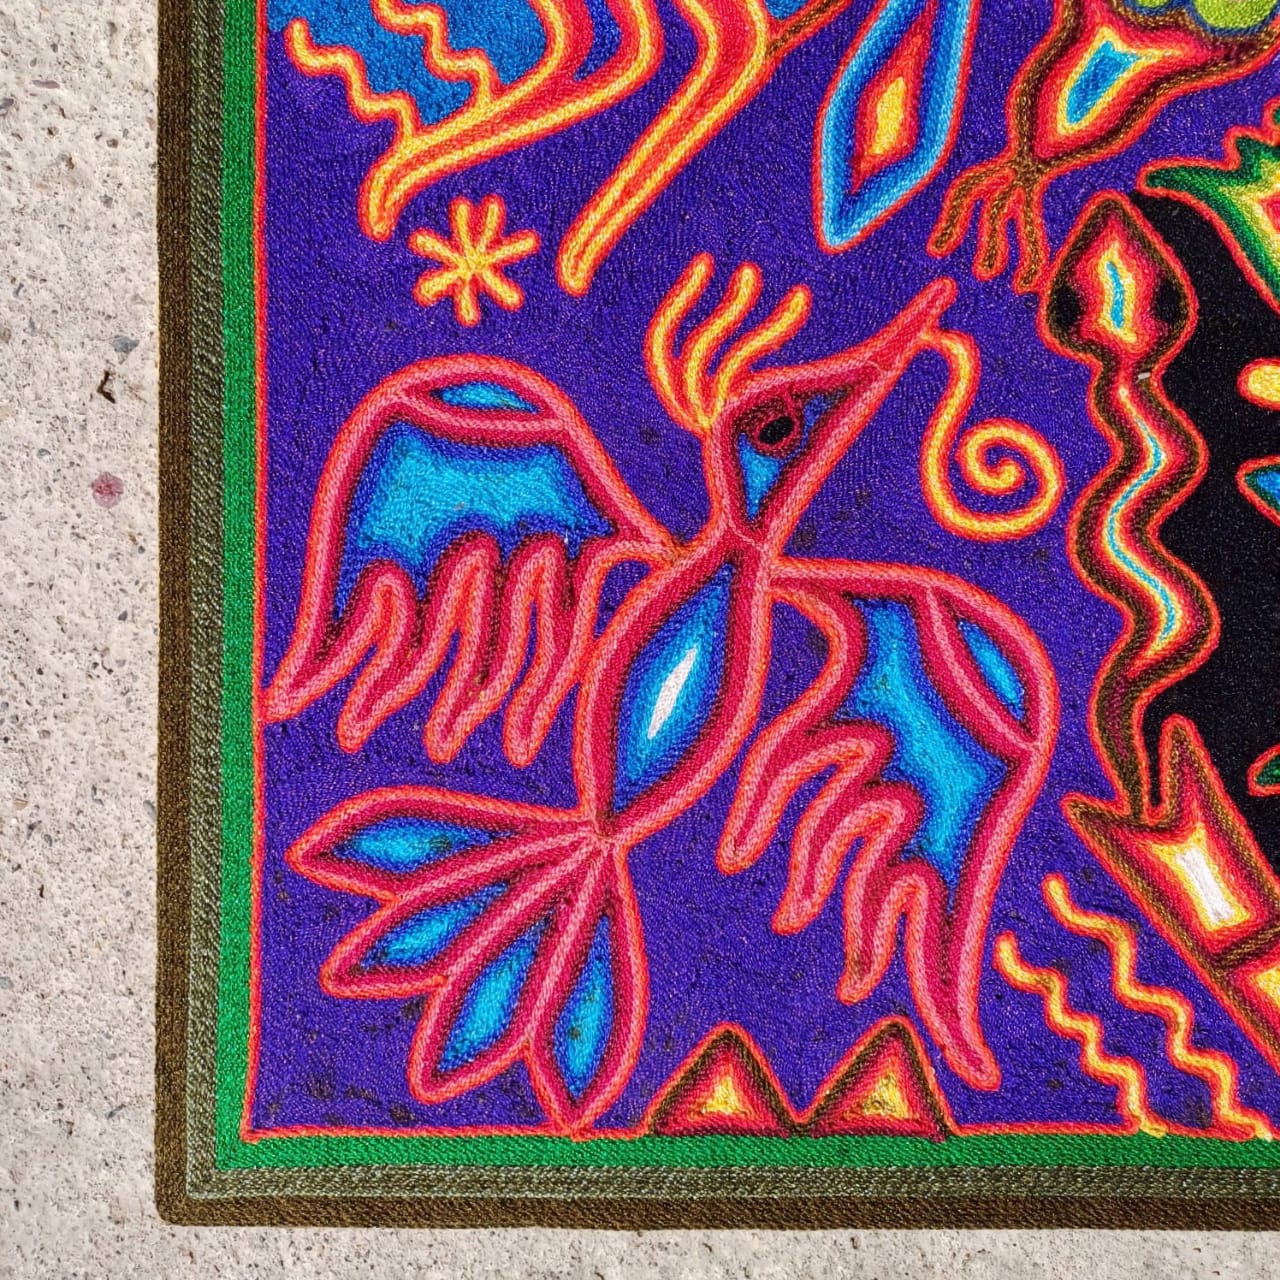 Huichol Yarn Painting Mexican Folk Art By Luciana Benitez PP7019